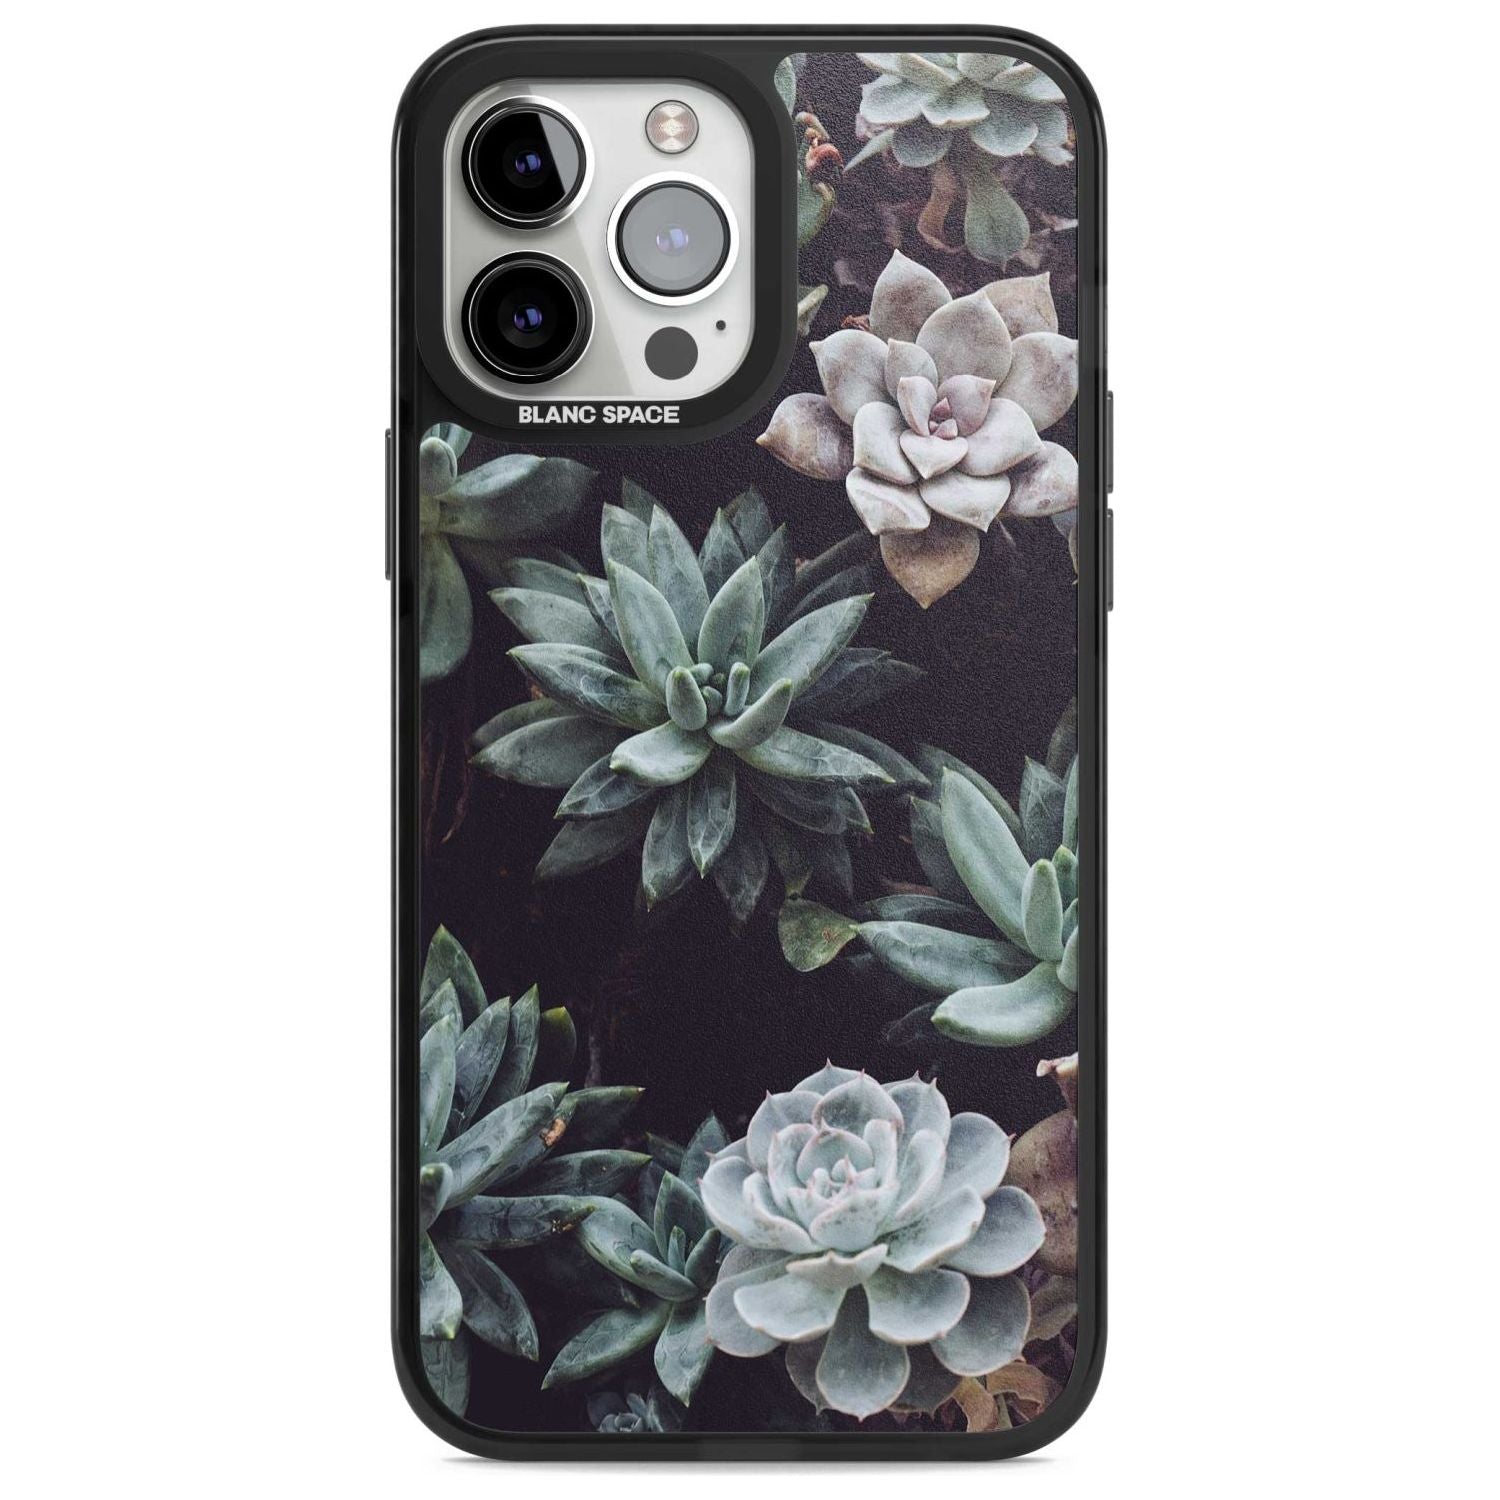 Mixed Succulents - Real Botanical Photographs Phone Case iPhone 13 Pro Max / Magsafe Black Impact Case Blanc Space